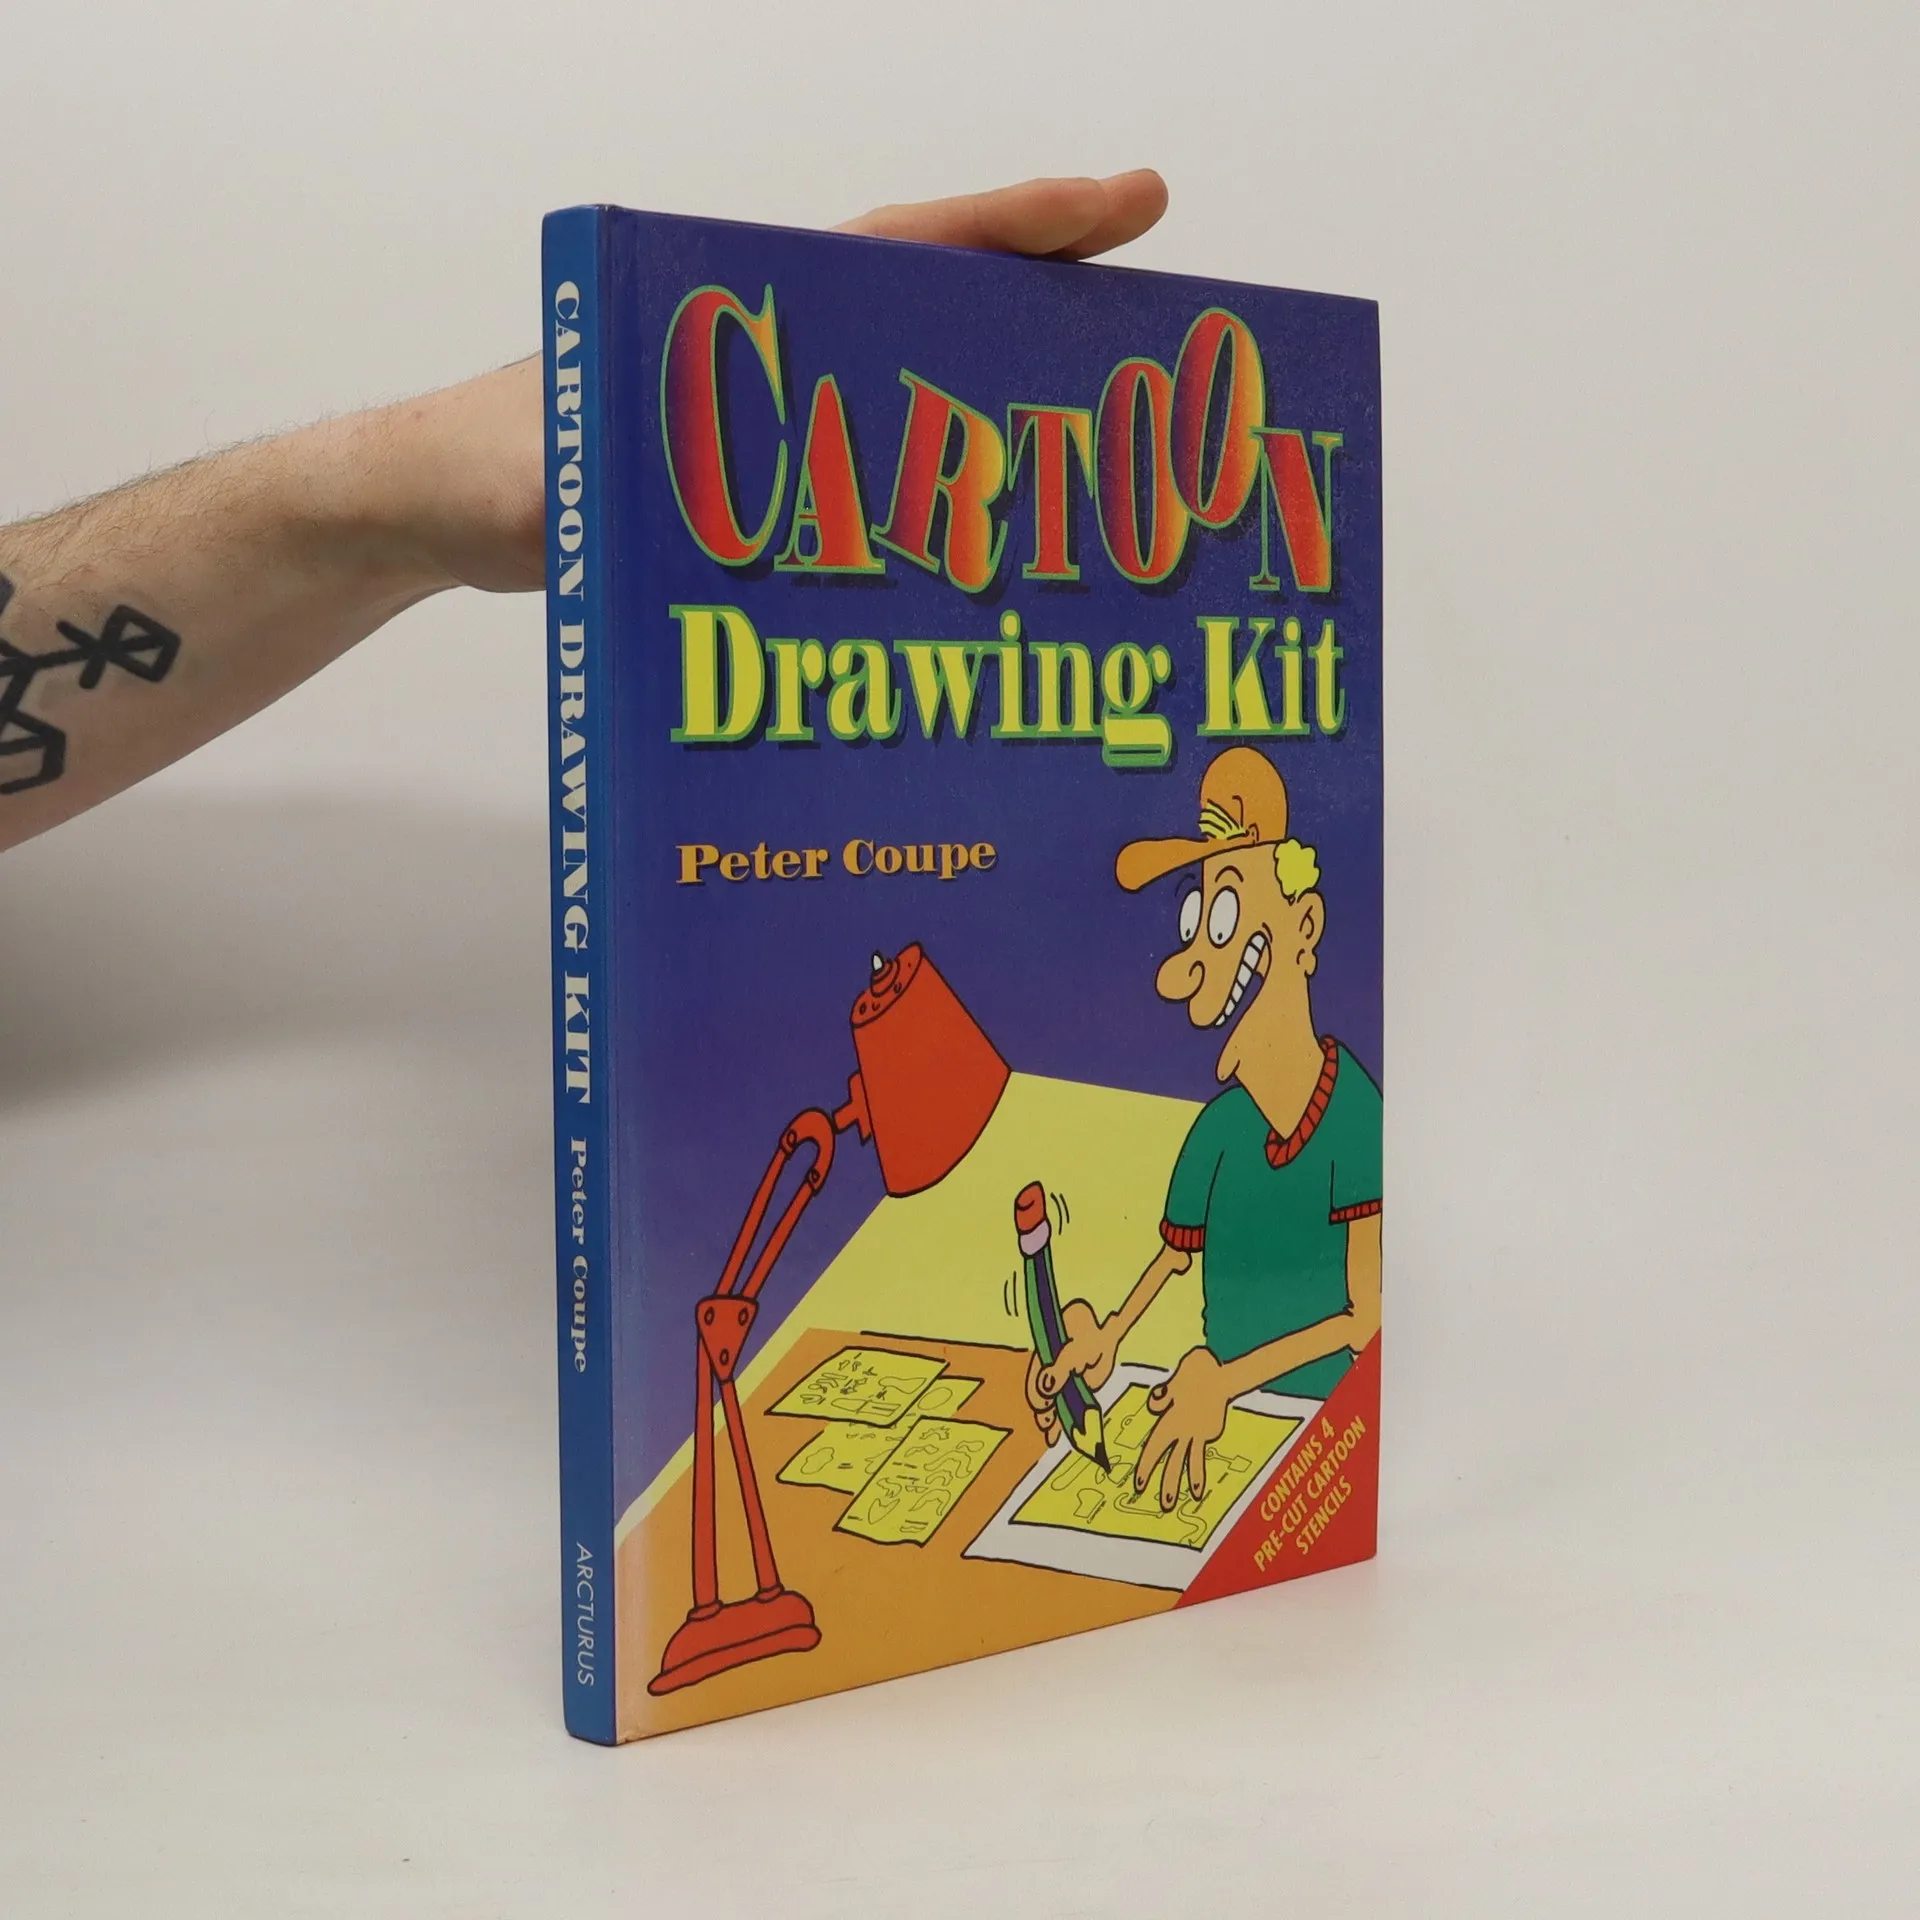 Cartoon drawing kit - Peter Coupe 